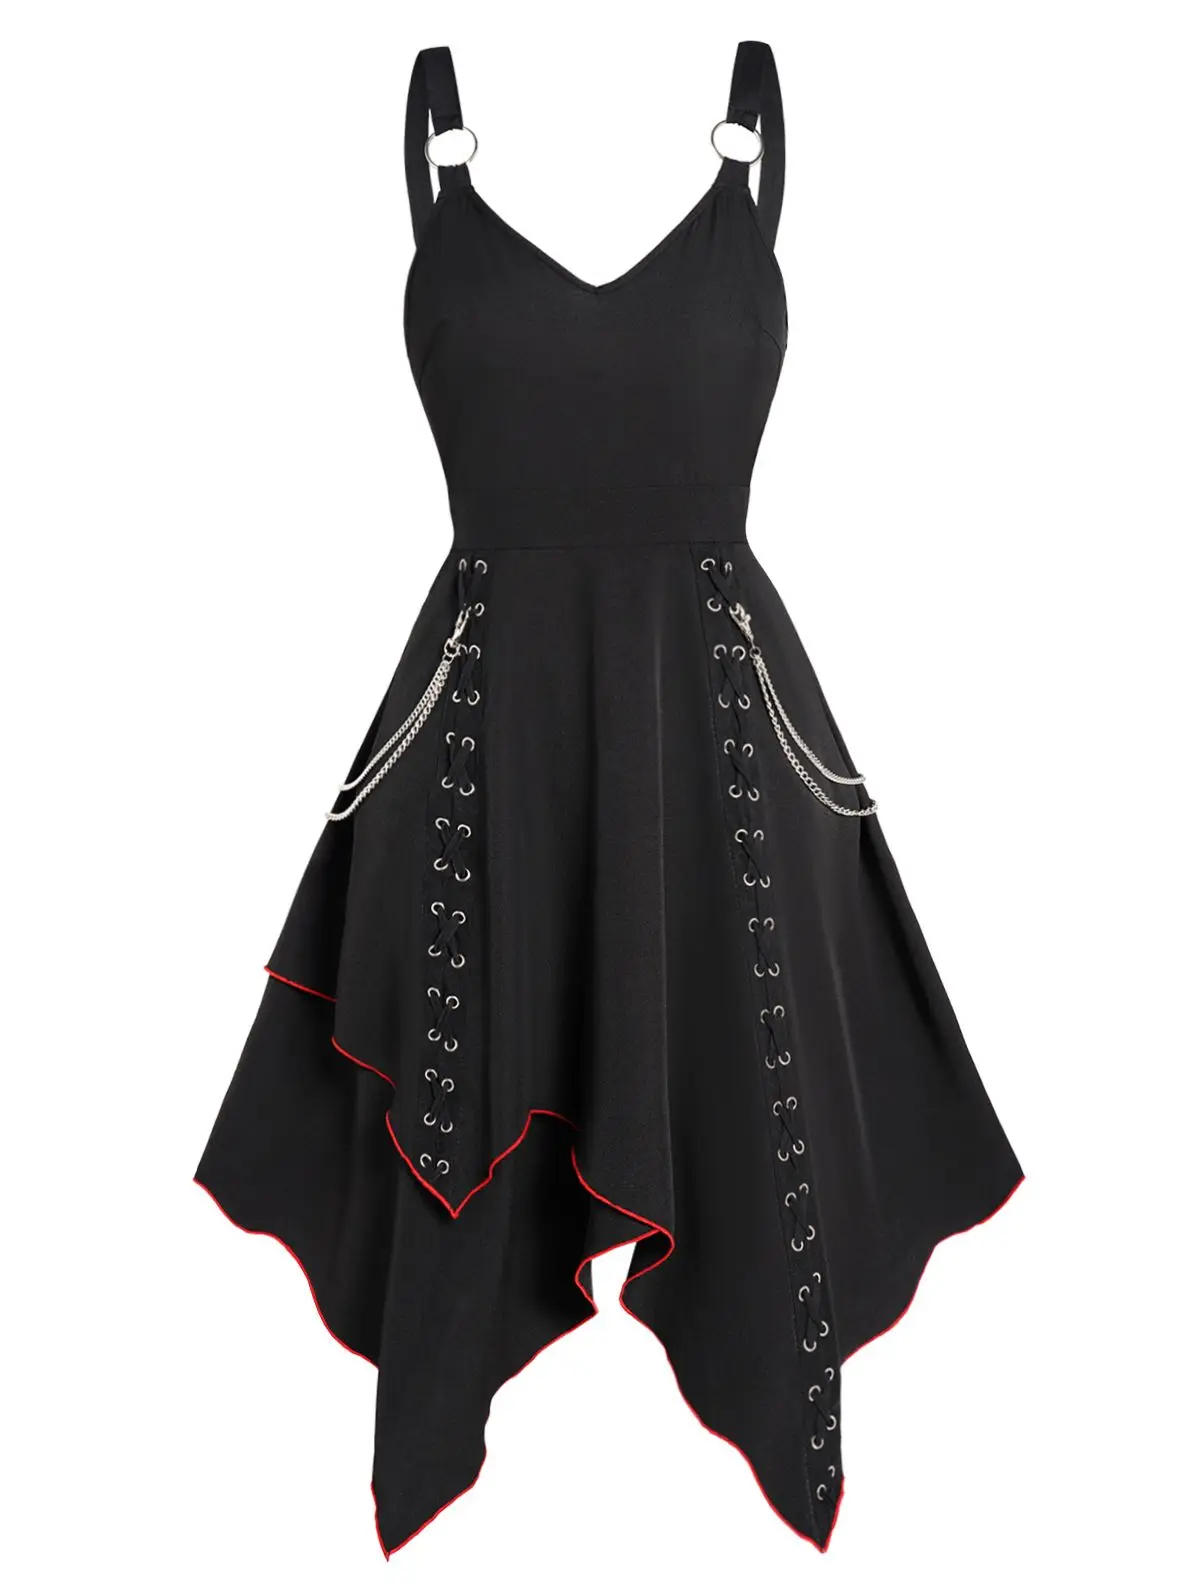 

Dressfo Black Gothic Dress Grommet Lace Up Chain Women Dress Overlay Asymmetrical Hem Sleeveless High Waist Dress